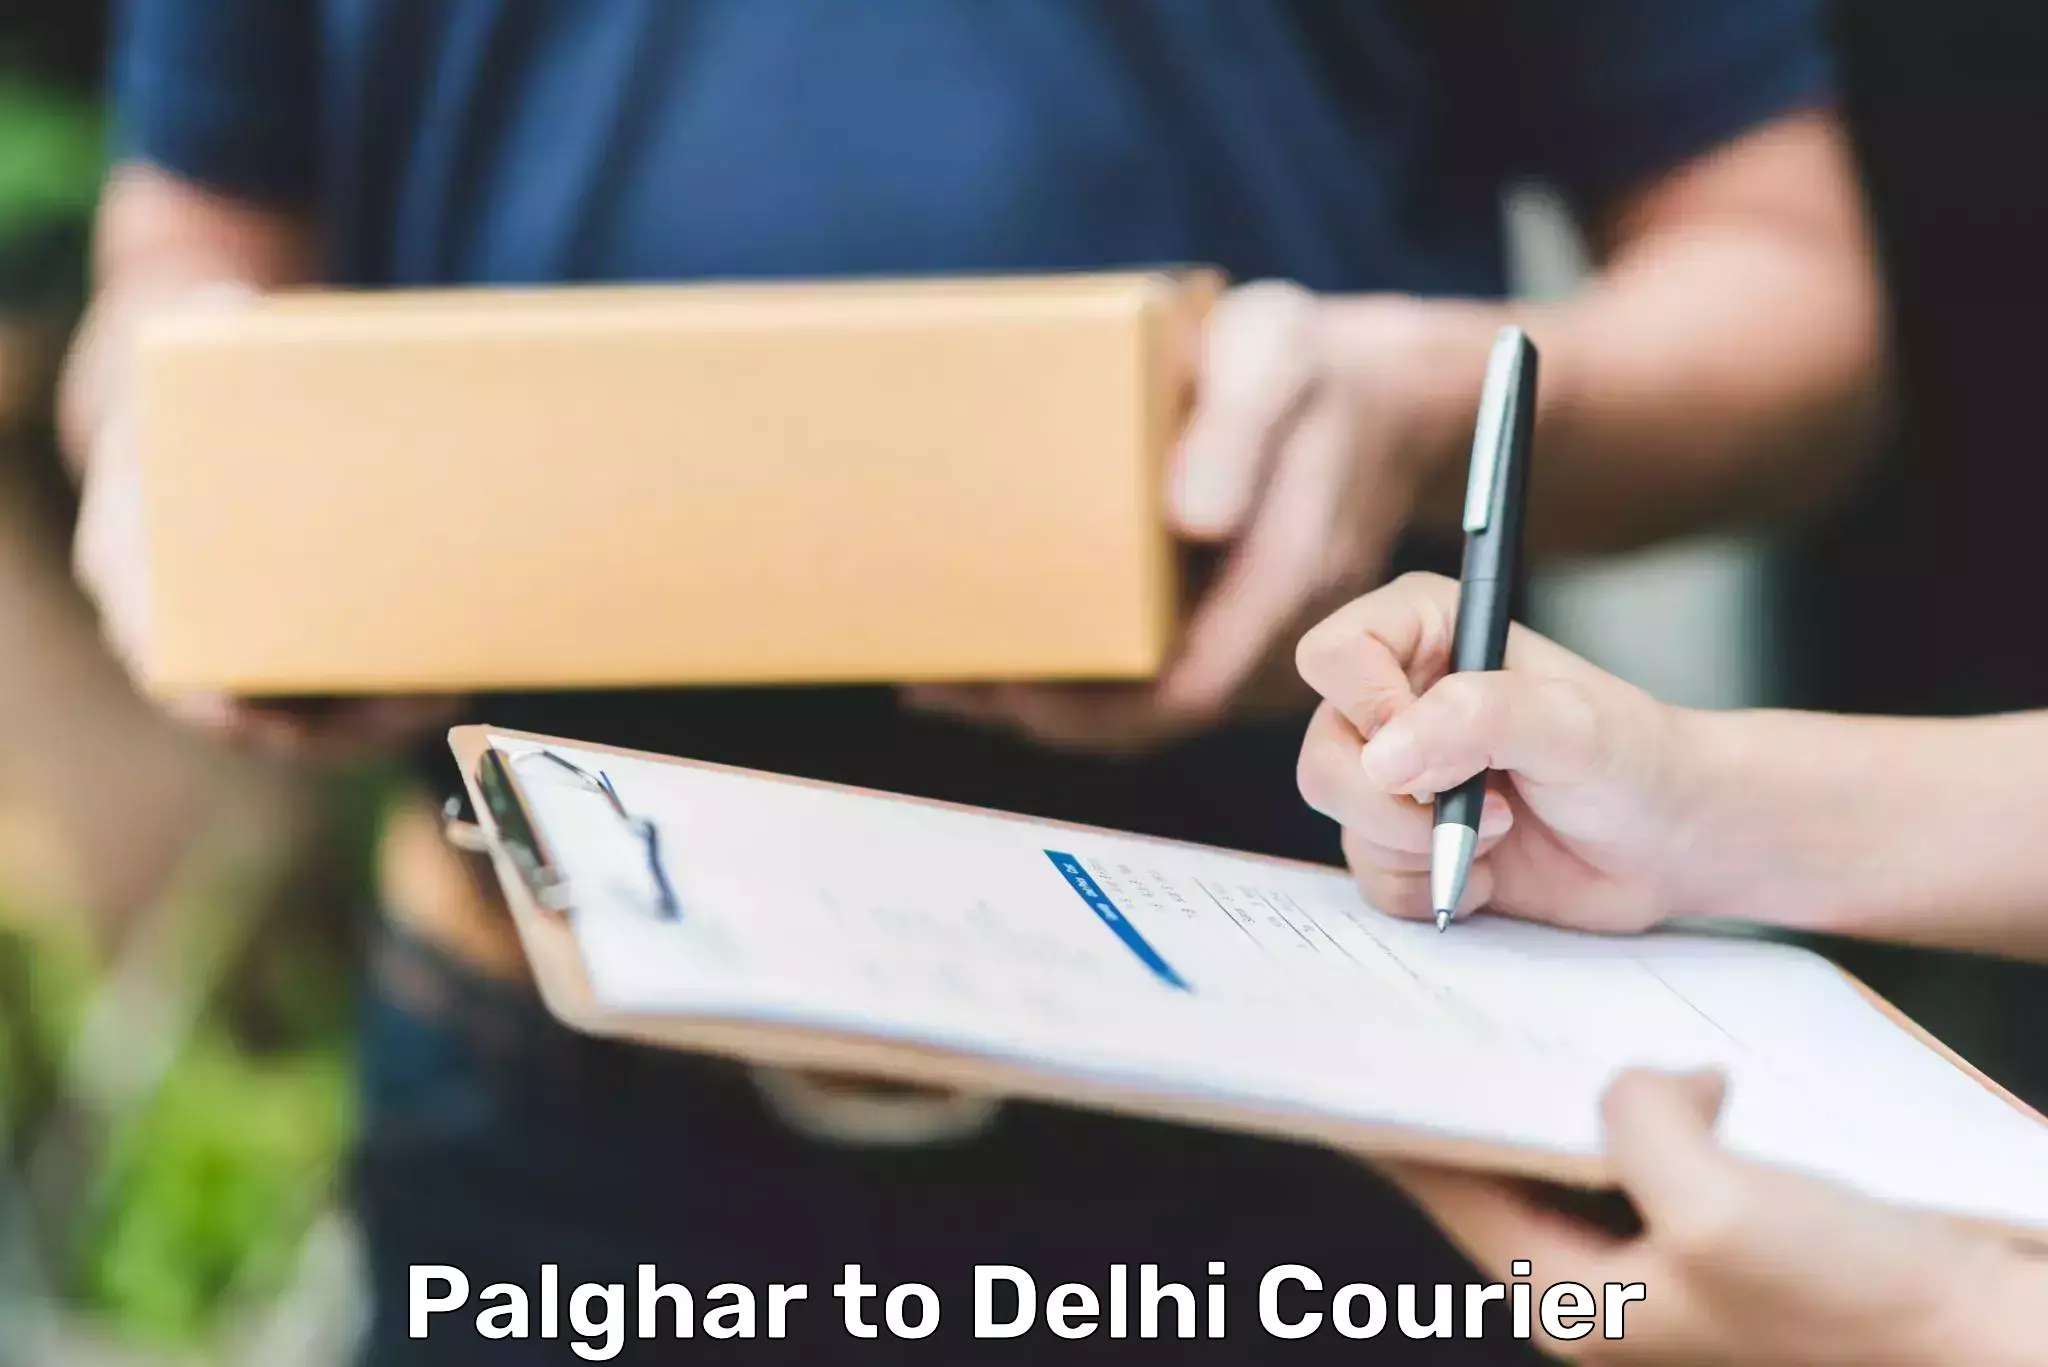 User-friendly delivery service Palghar to Delhi